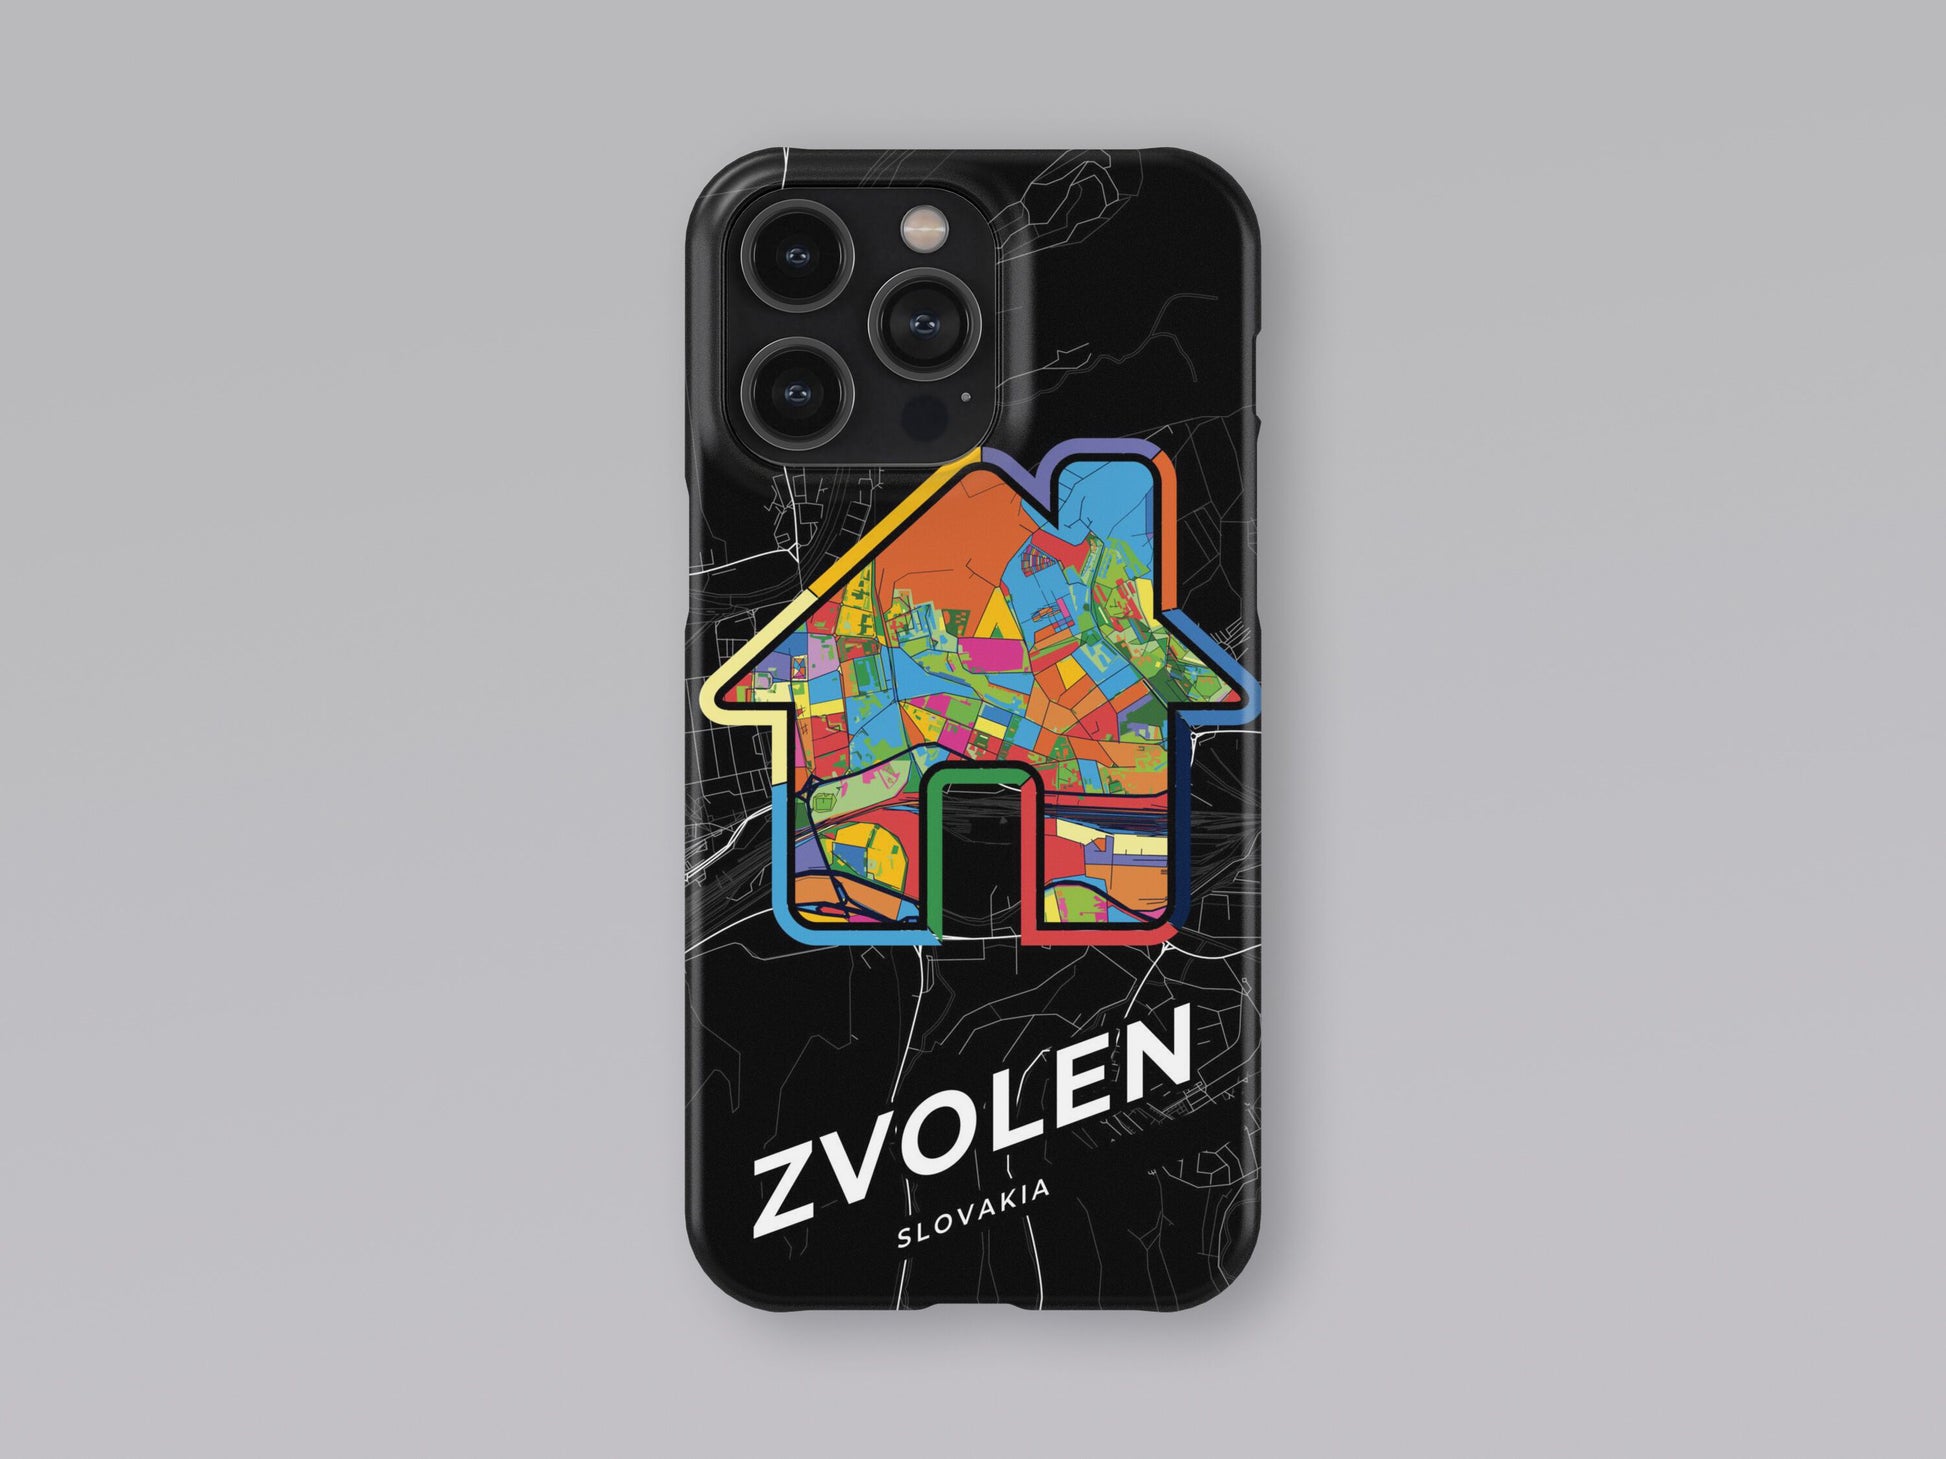 Zvolen Slovakia slim phone case with colorful icon 3